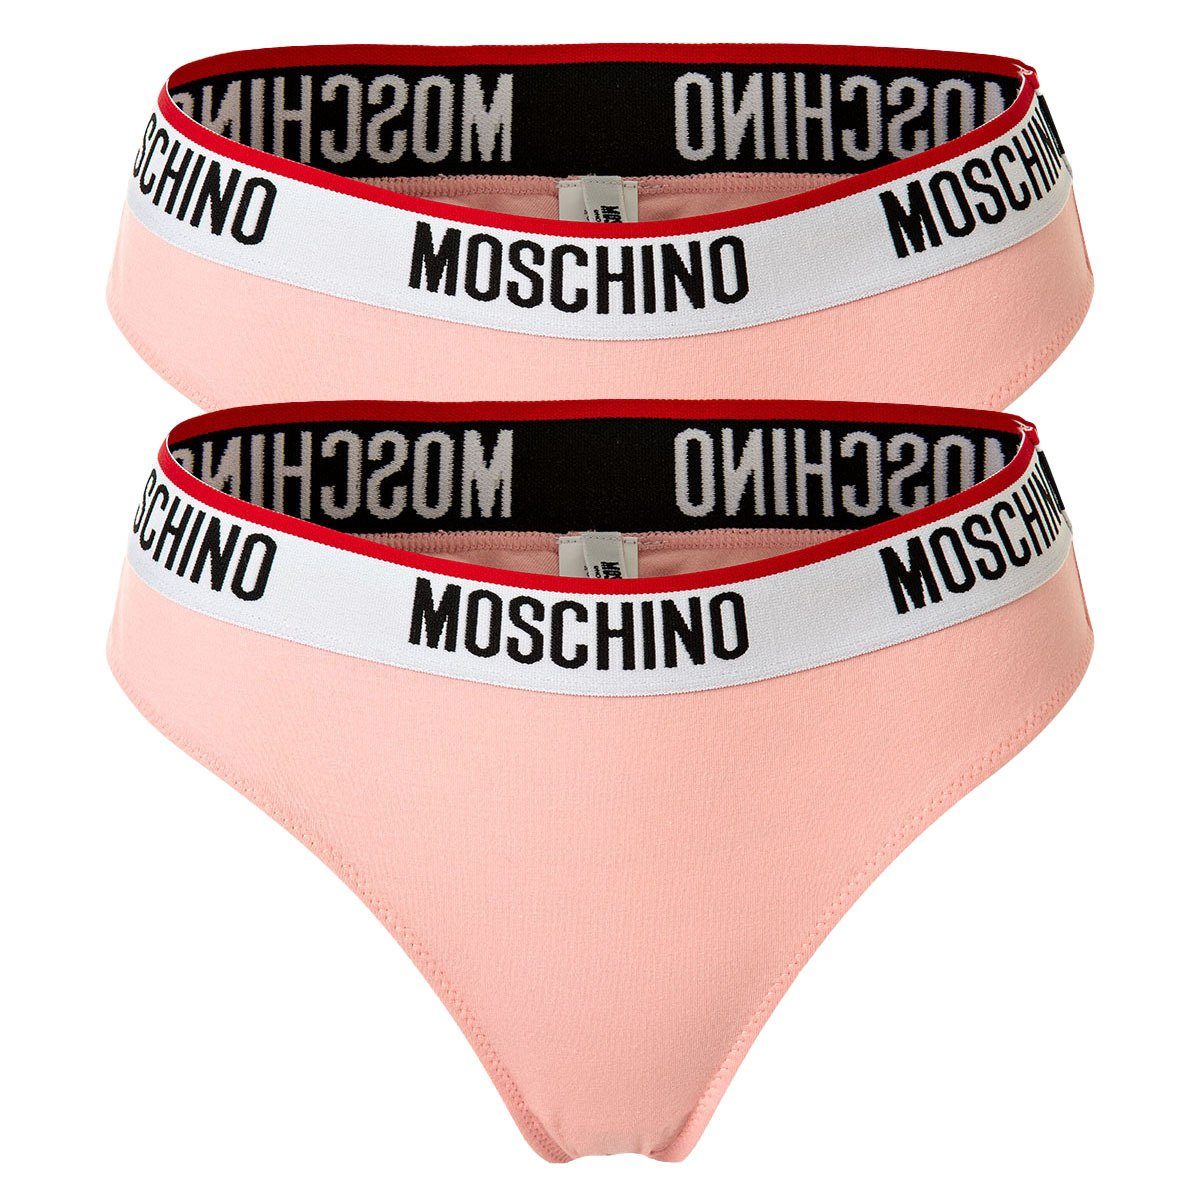 Moschino Slip Damen Hipsters 2er Pack - Briefs, Unterhose Rosa